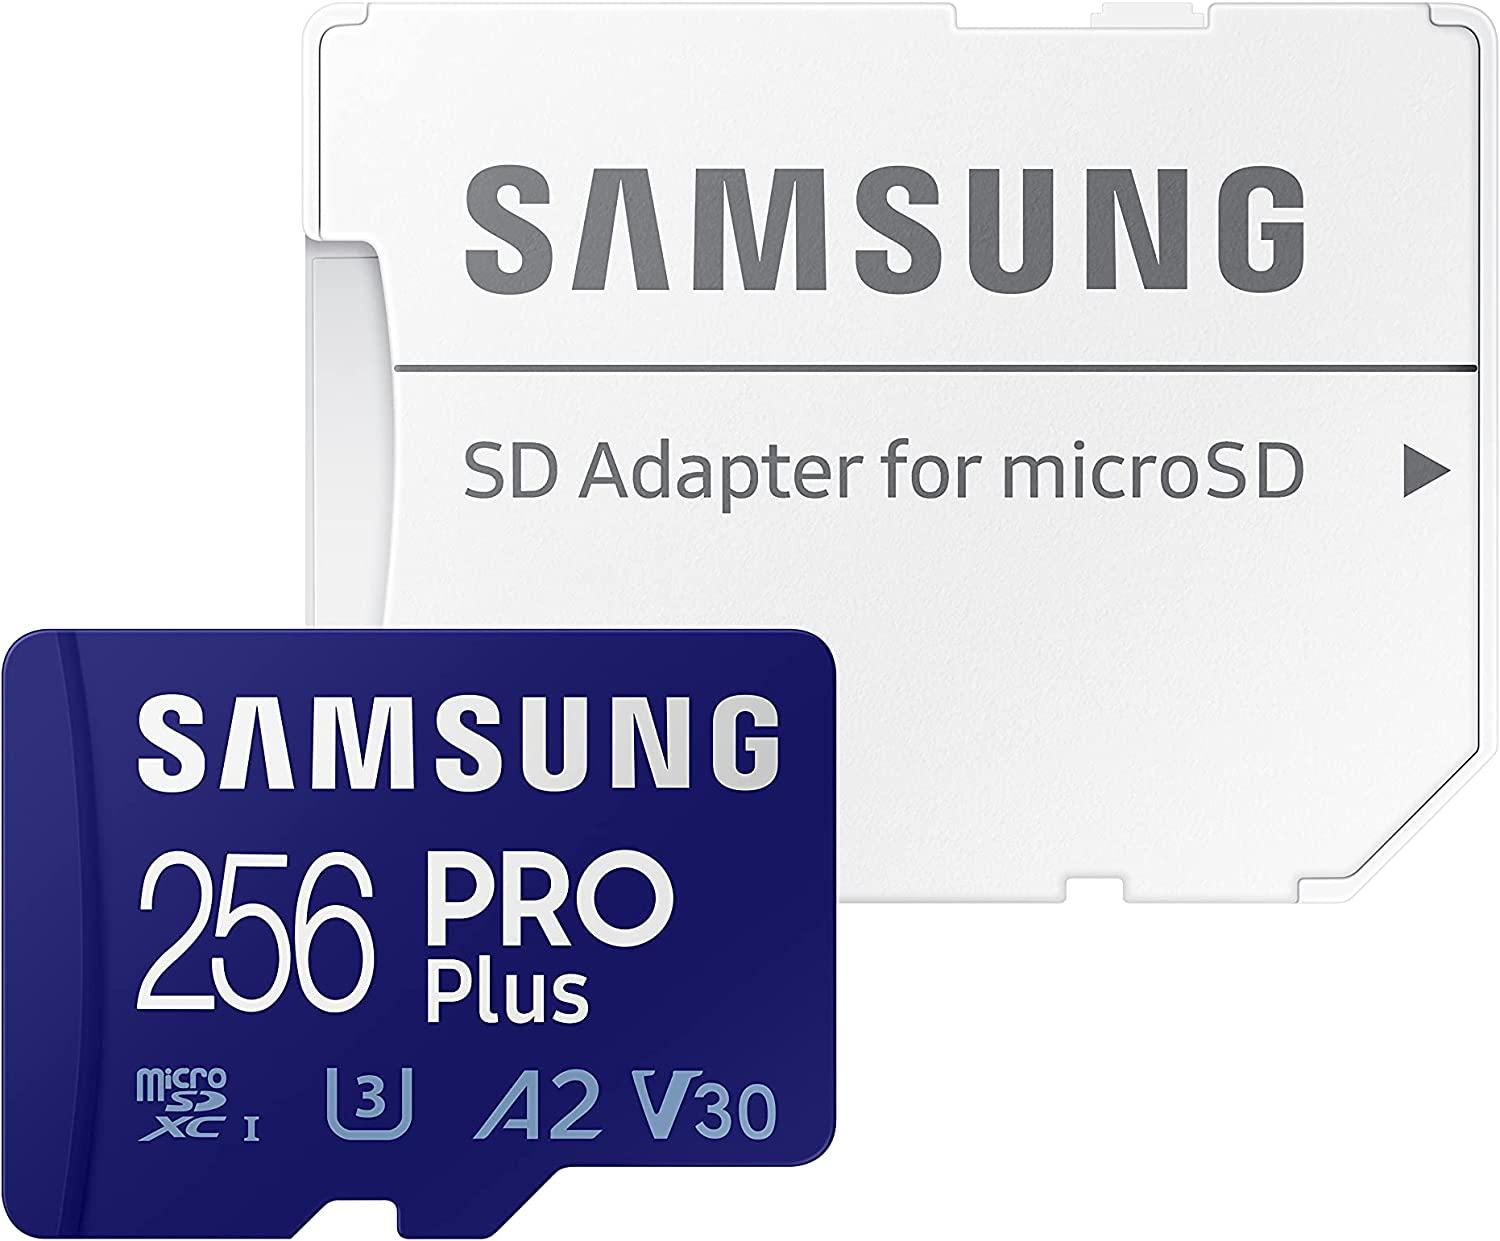 256GB Samsung Pro Plus U3 A2 V30 microSDXC Memory Card for $28.99 Shipped